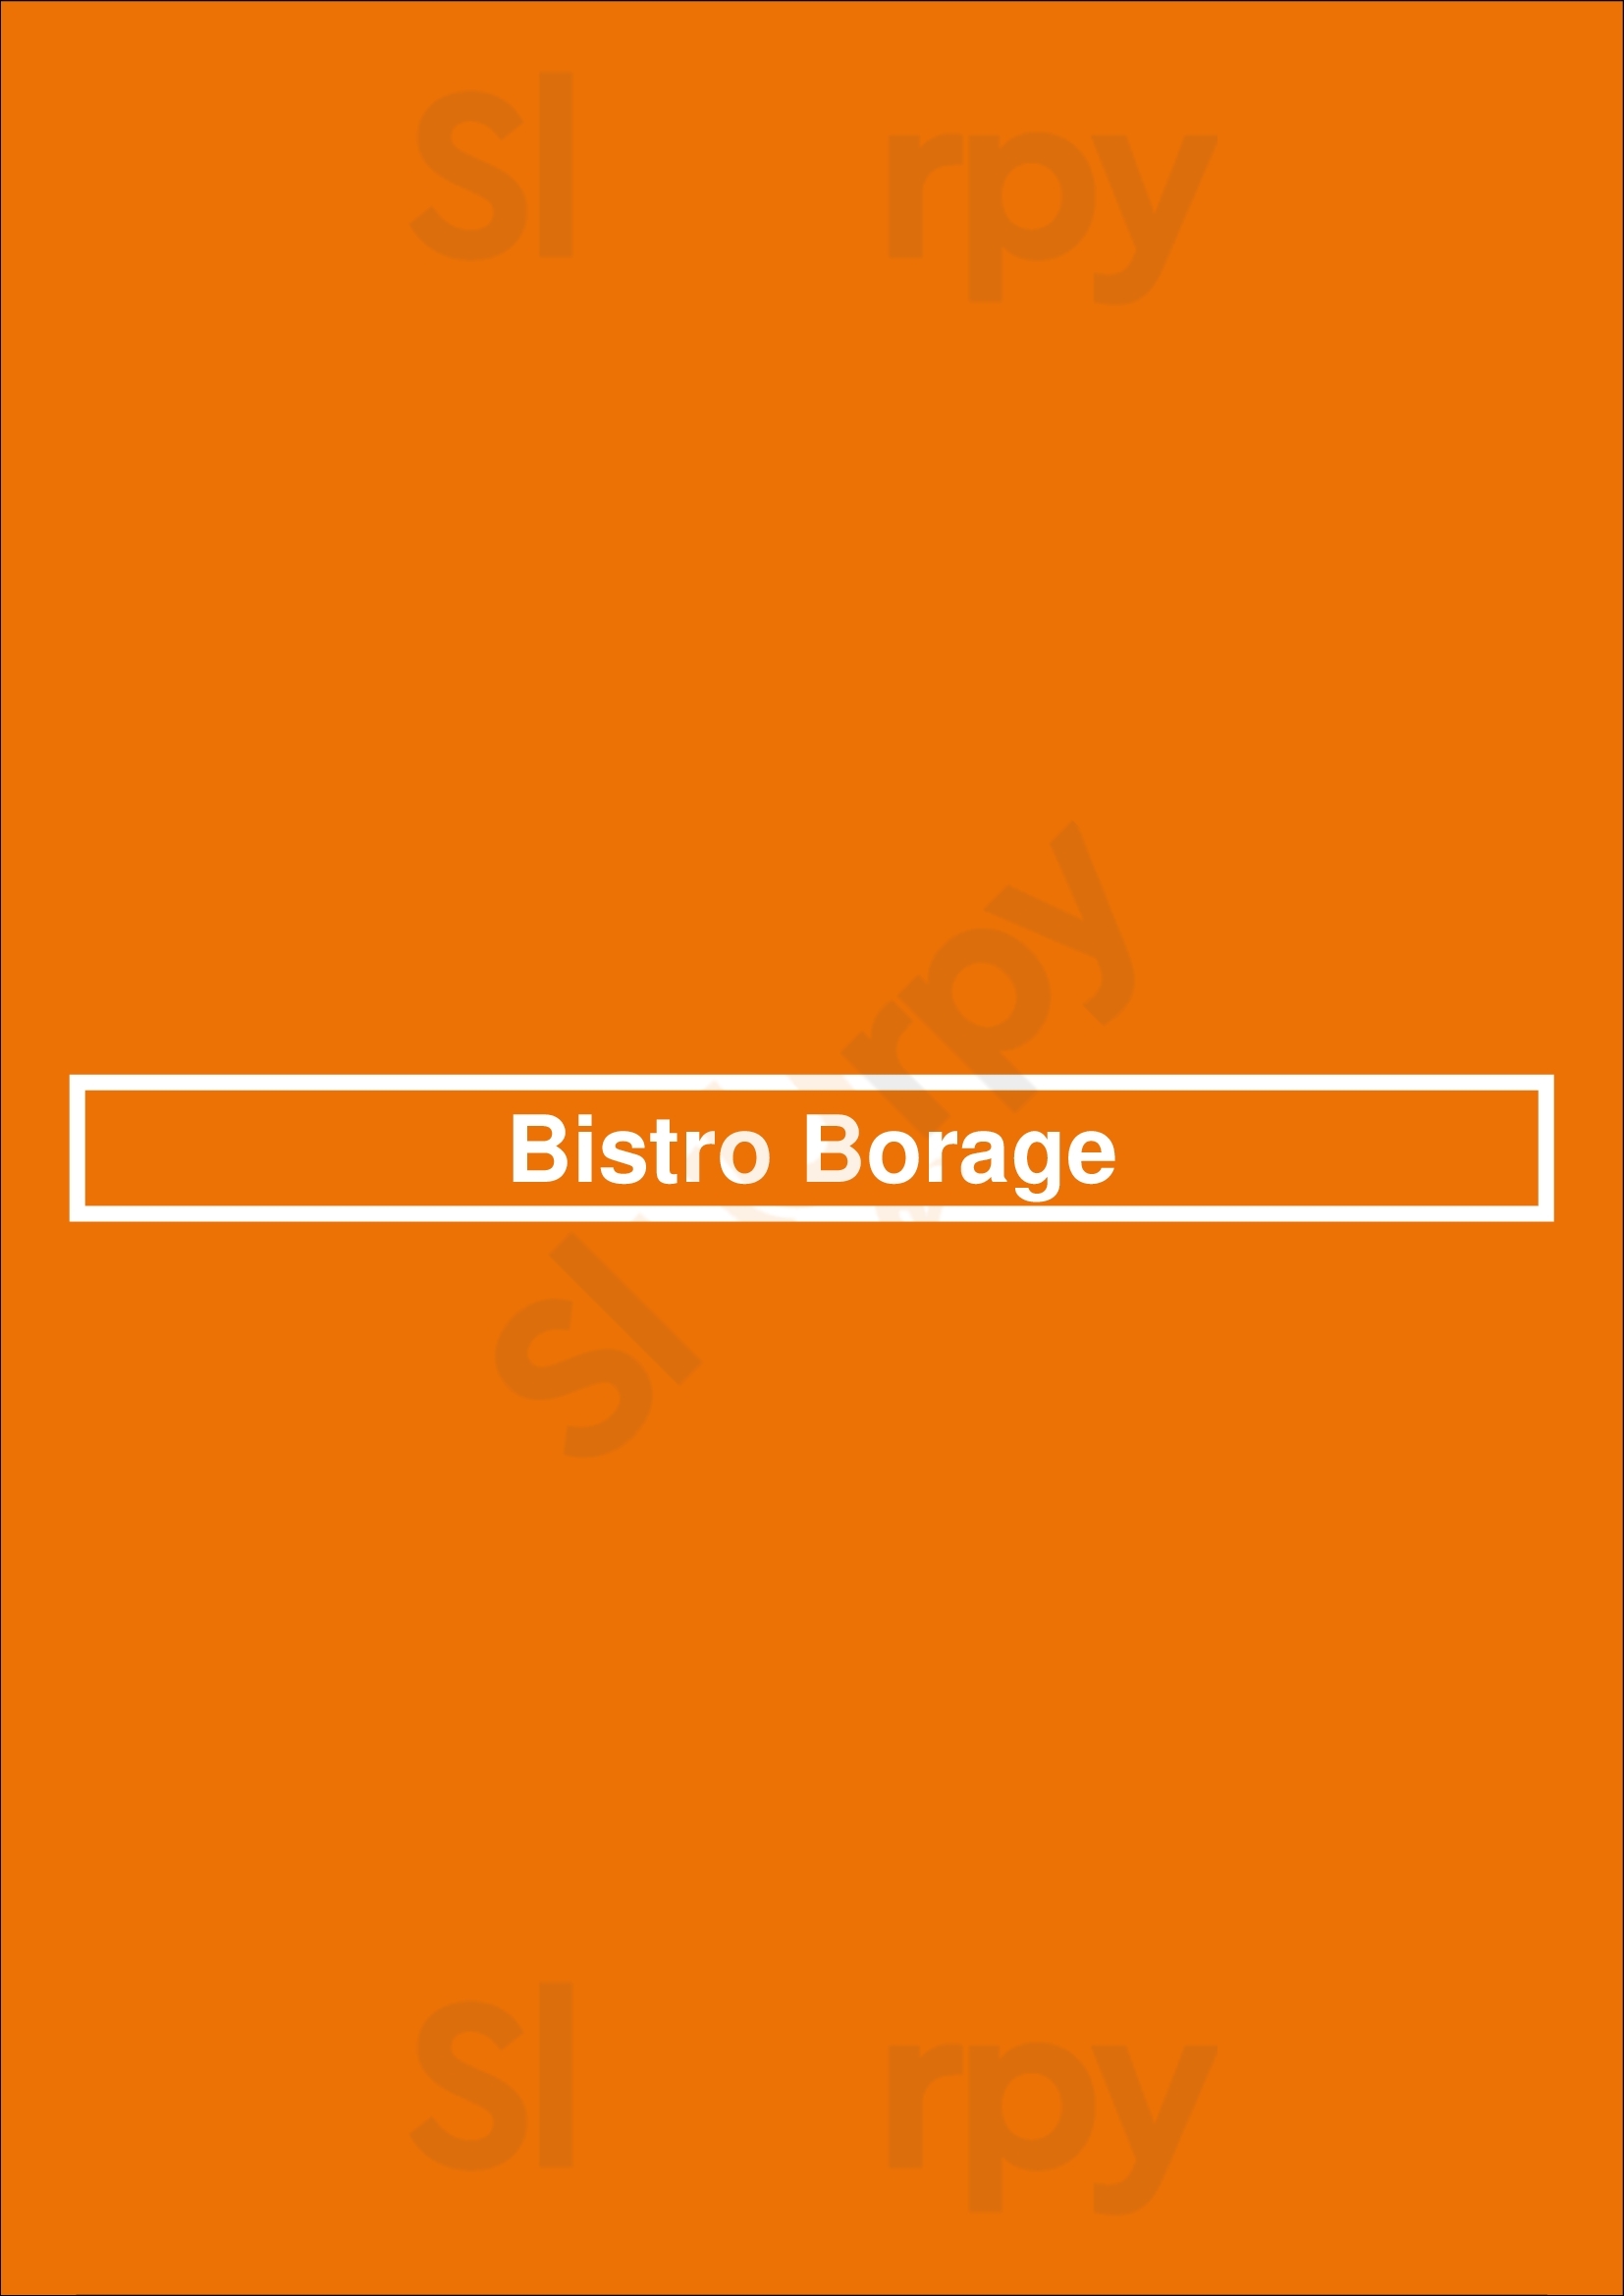 Bistro Borage Den Bosch Menu - 1